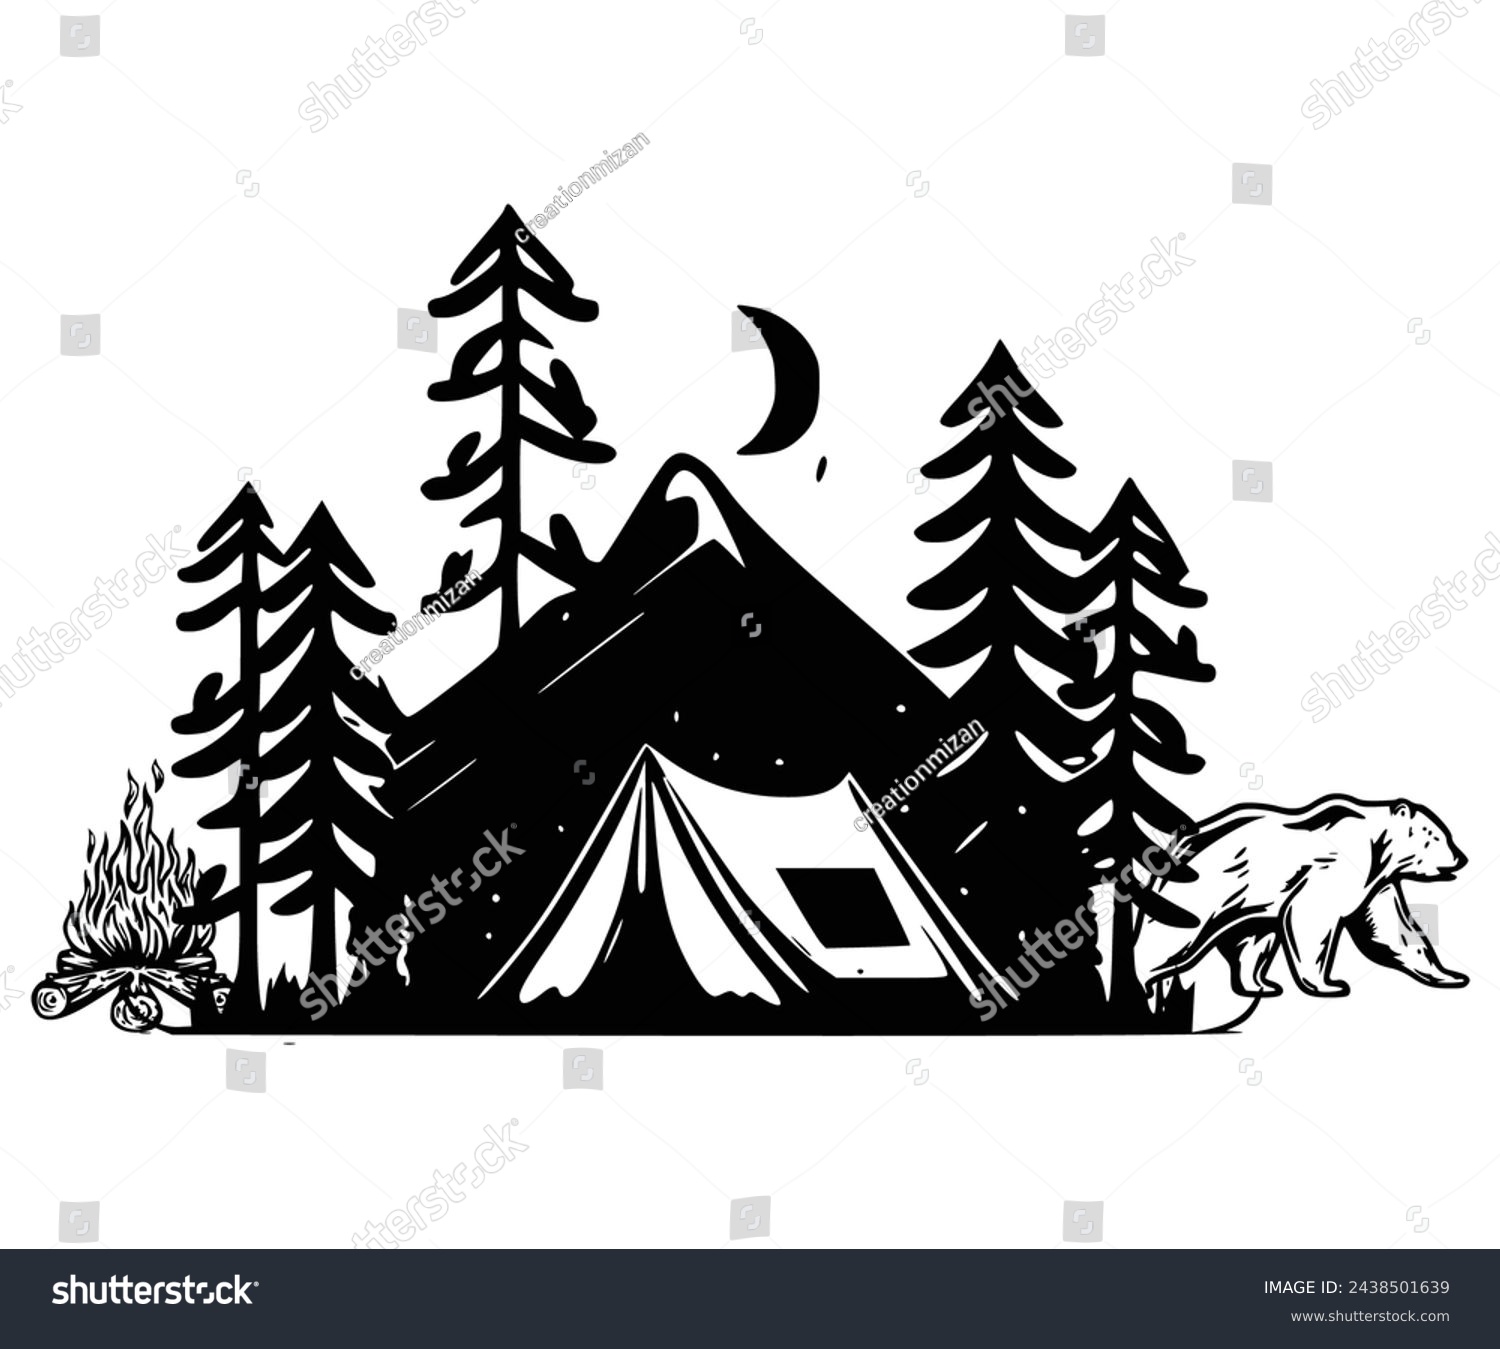 SVG of Svg,Camping Svg,Hiking,Funny Camping,Adventure,Summer Camp,Happy Camper,Camp Life,Camp Saying,Camping Shirt svg